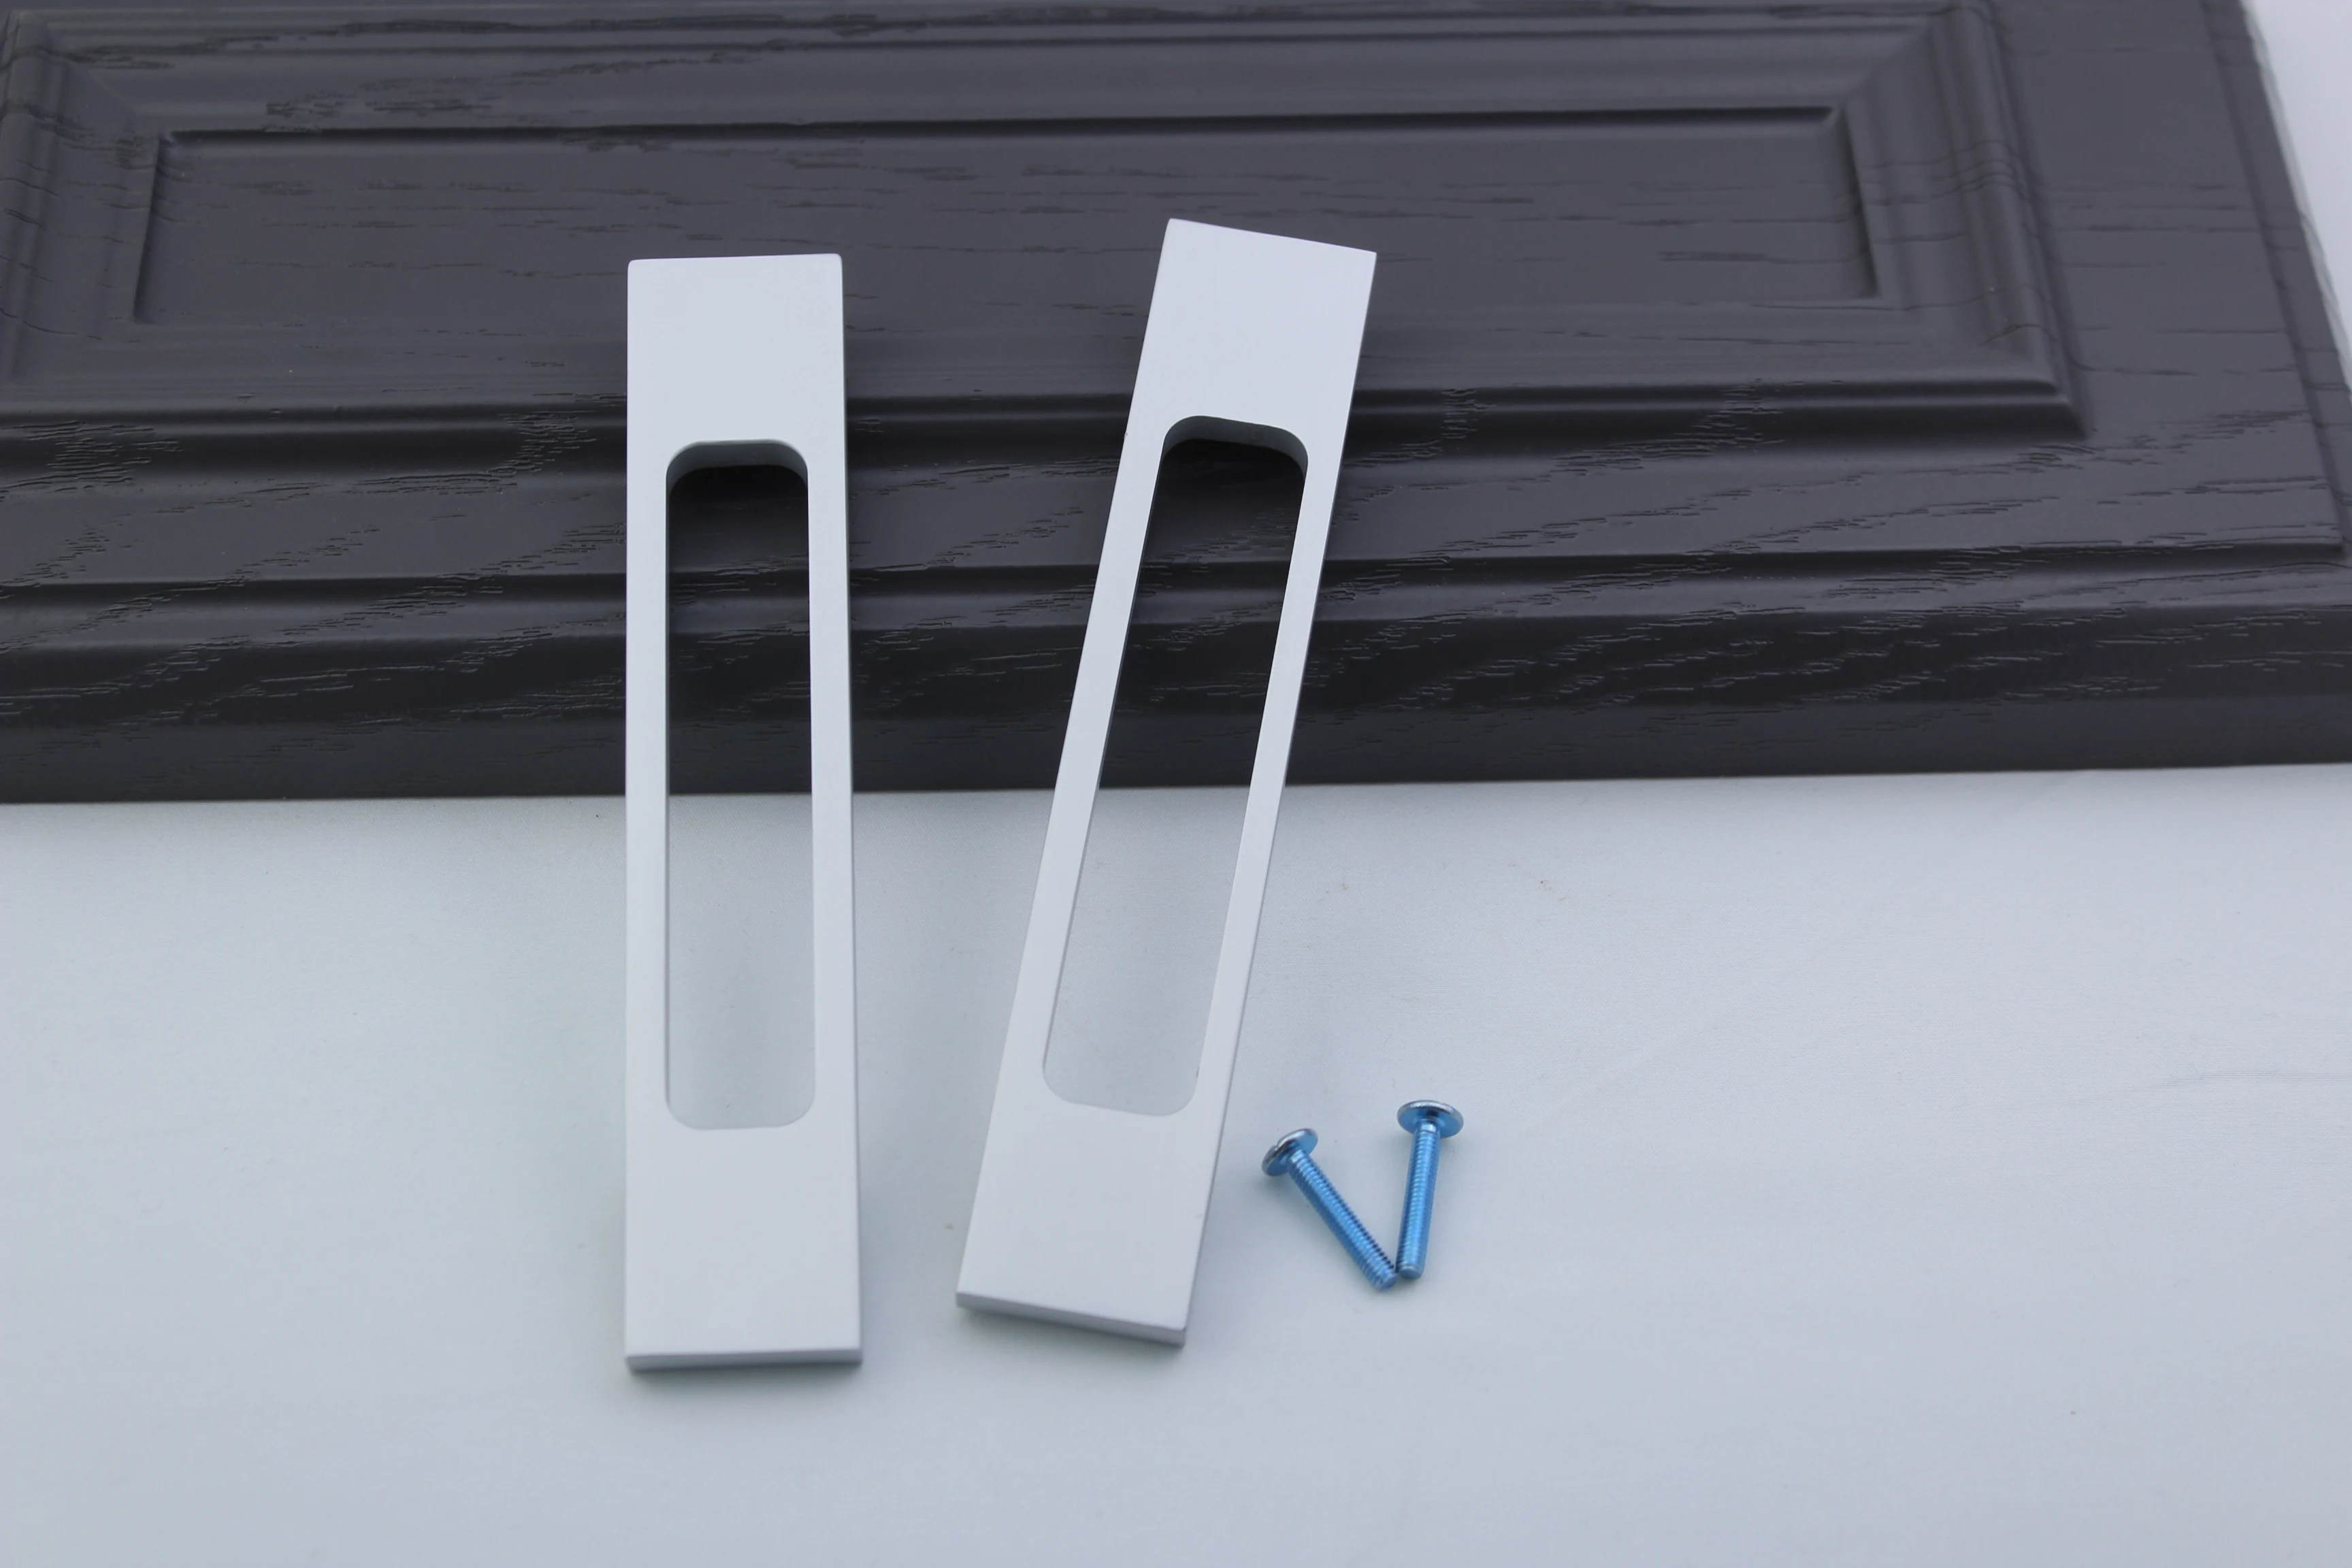 New design factory price aluminum material cabinet handles